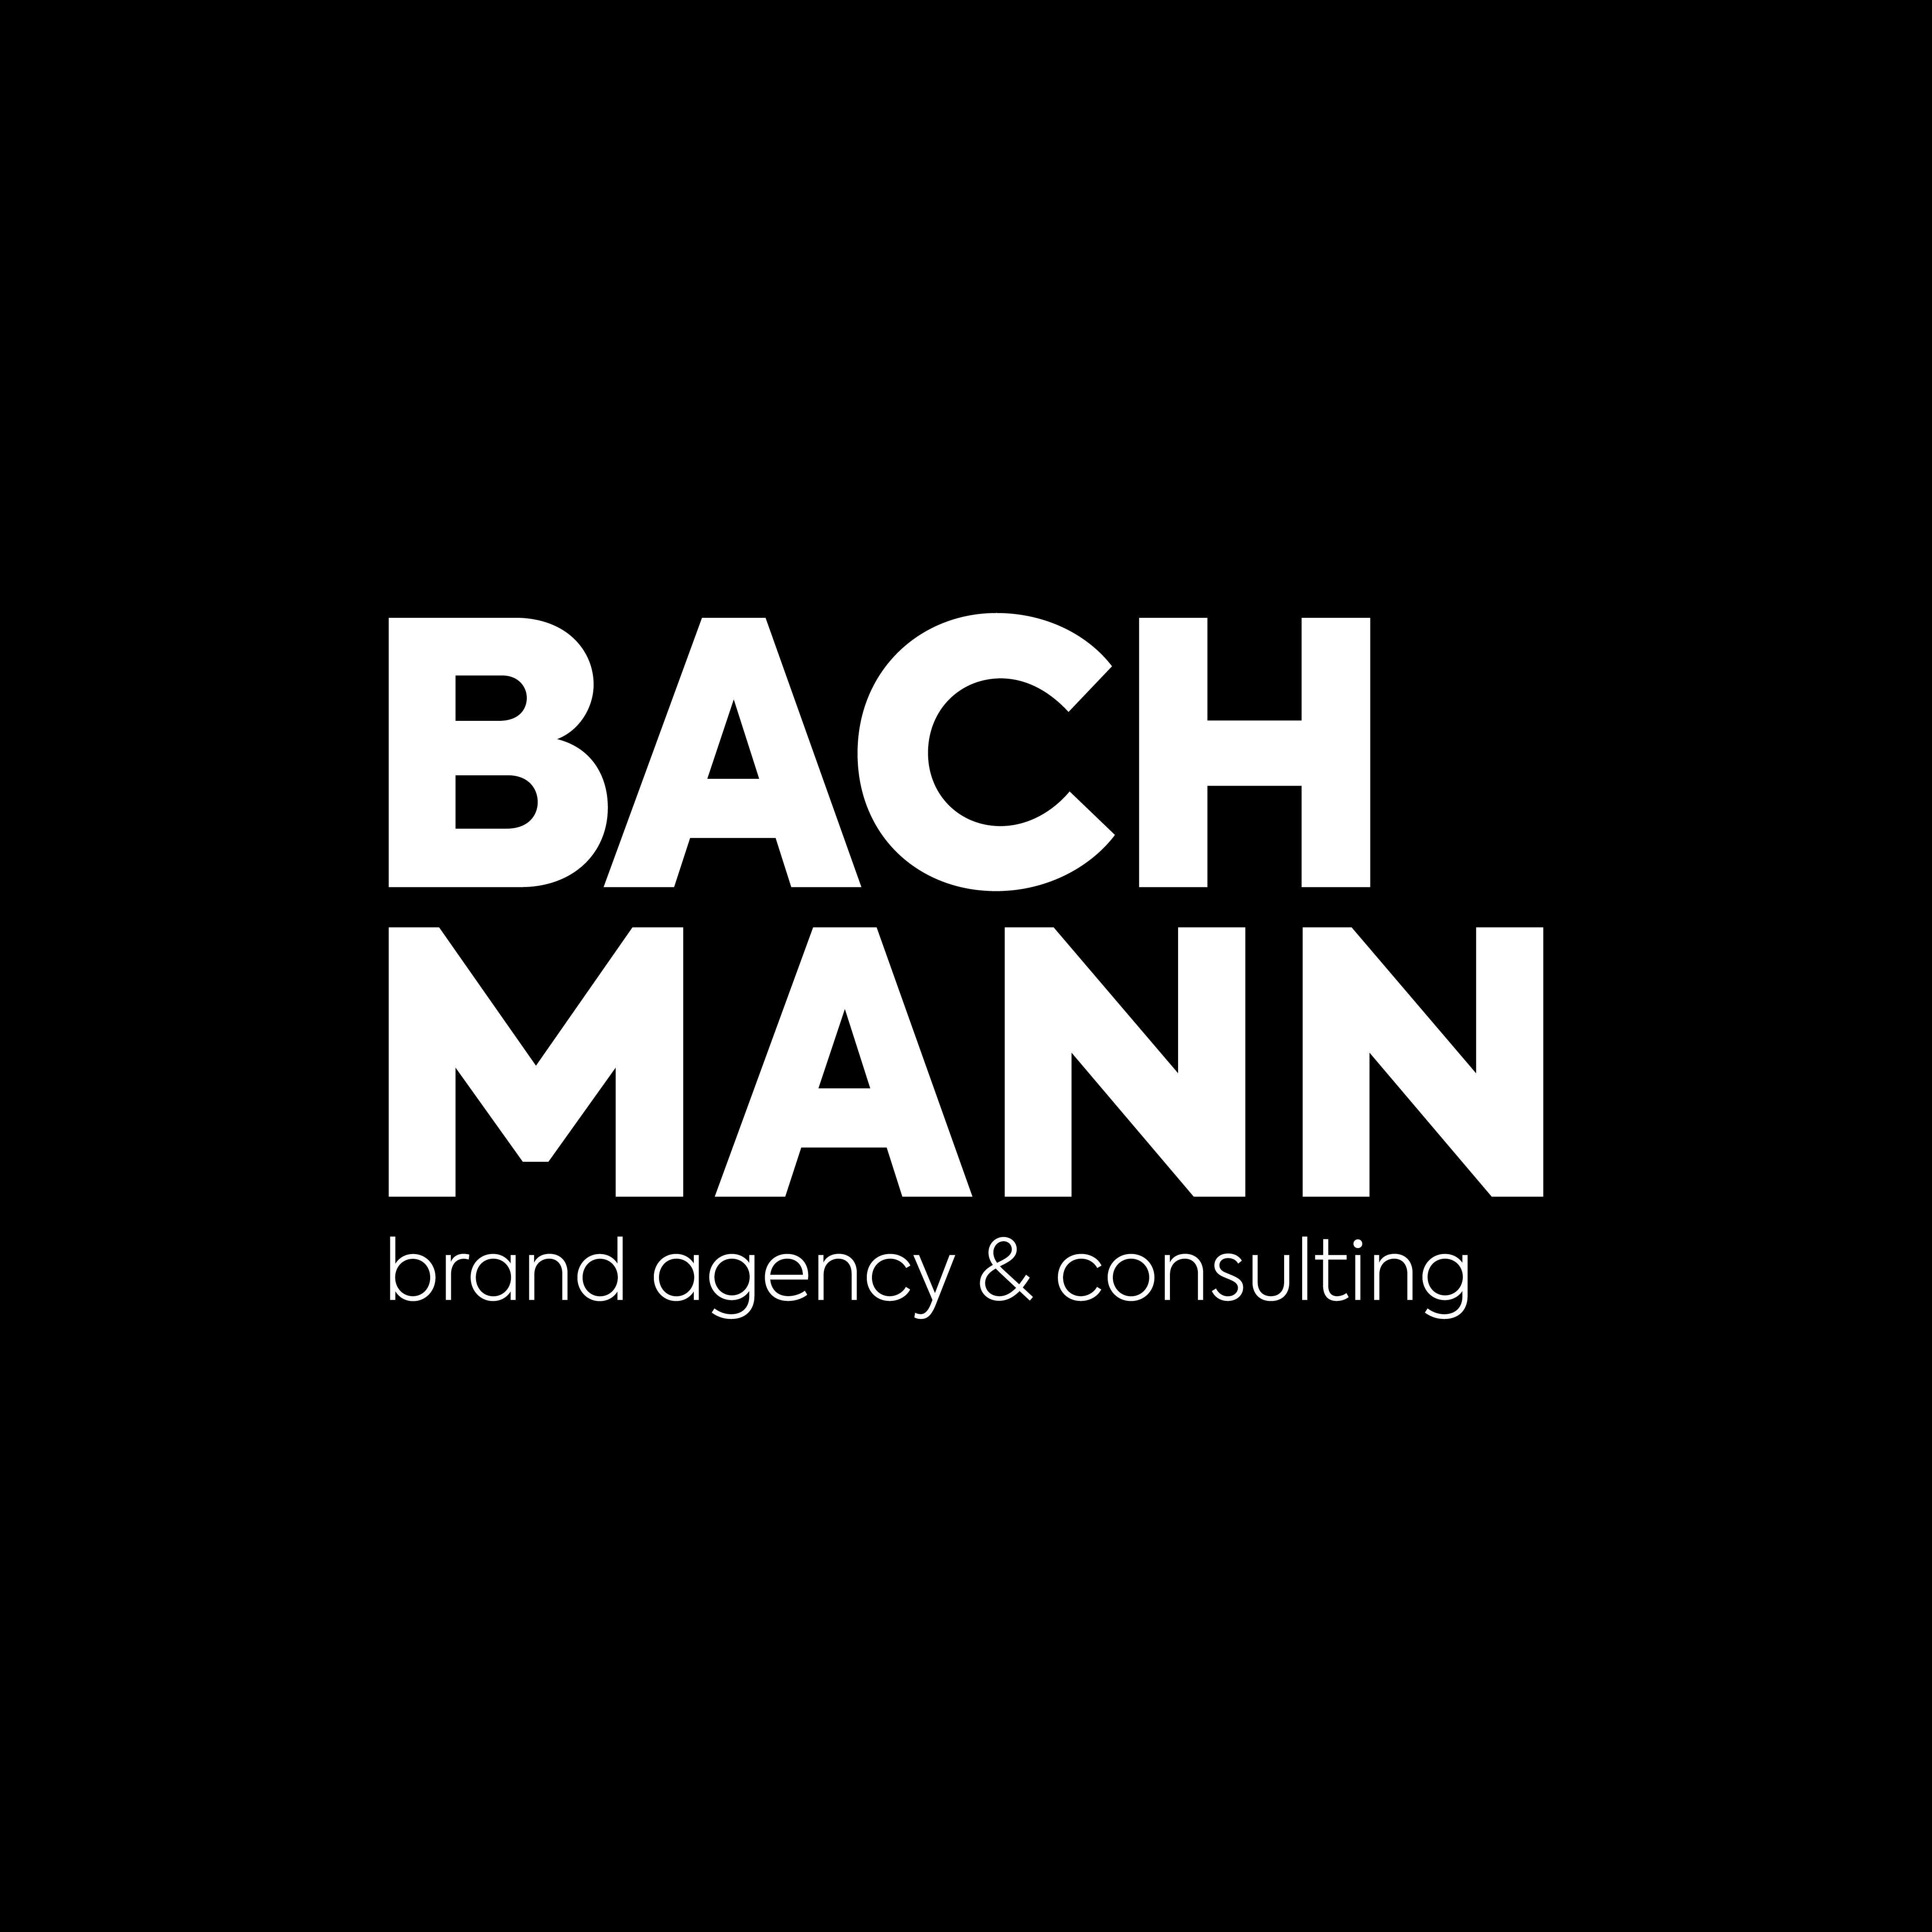 Bachmann brand agency & consulting in Dortmund